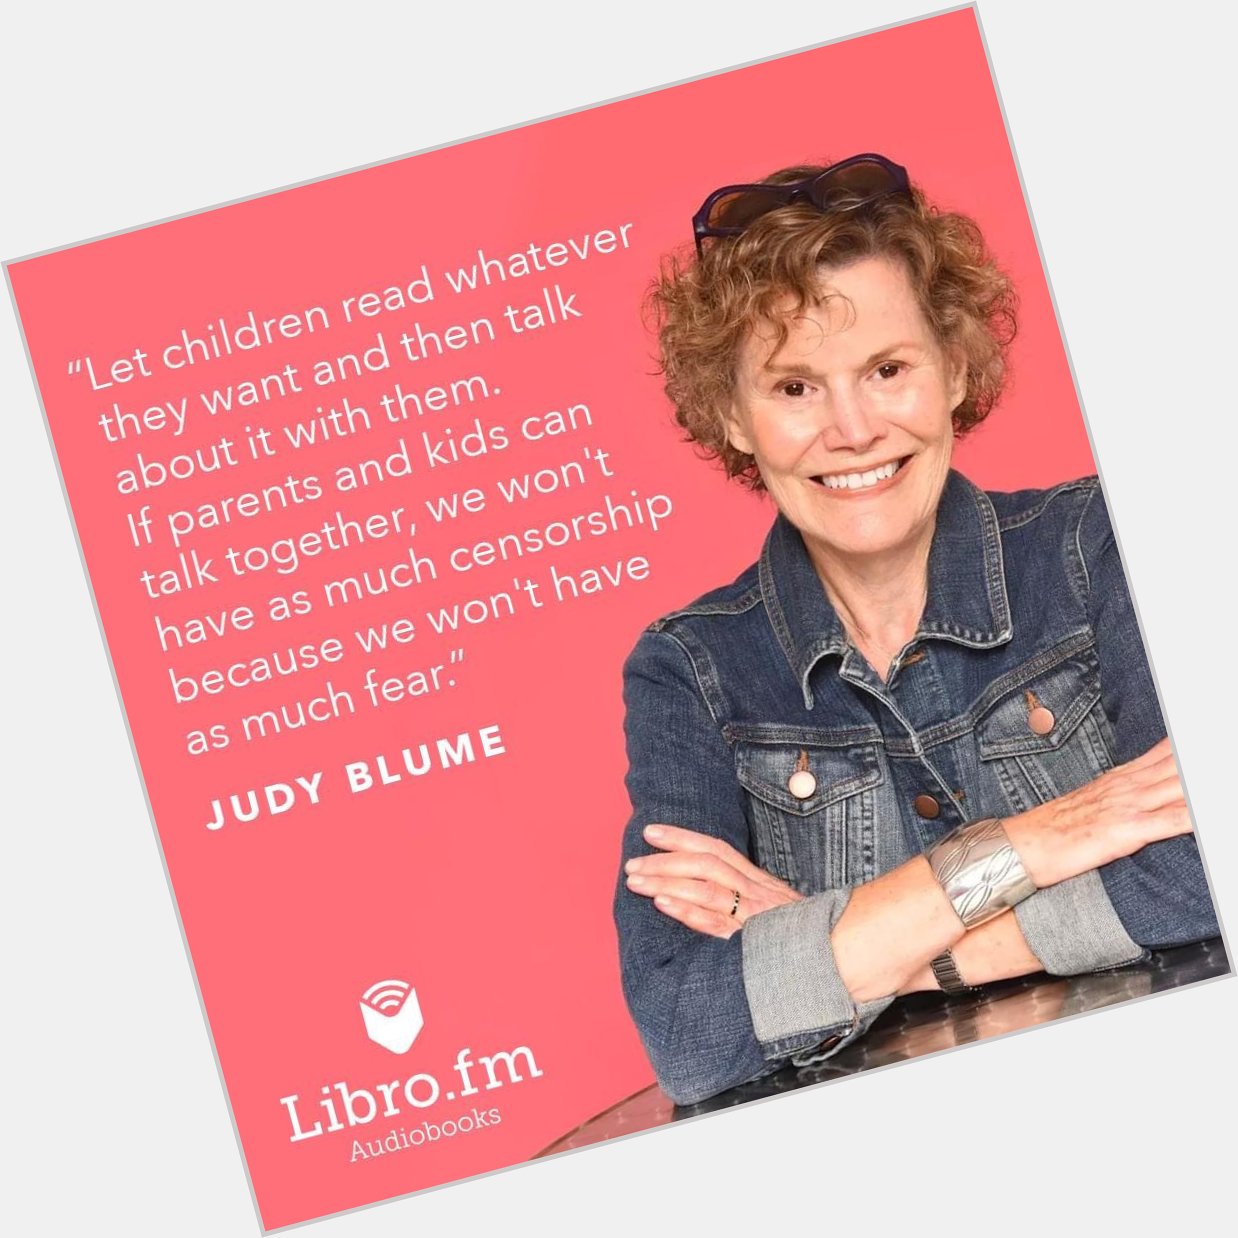 Happy birthday Judy Blume! 